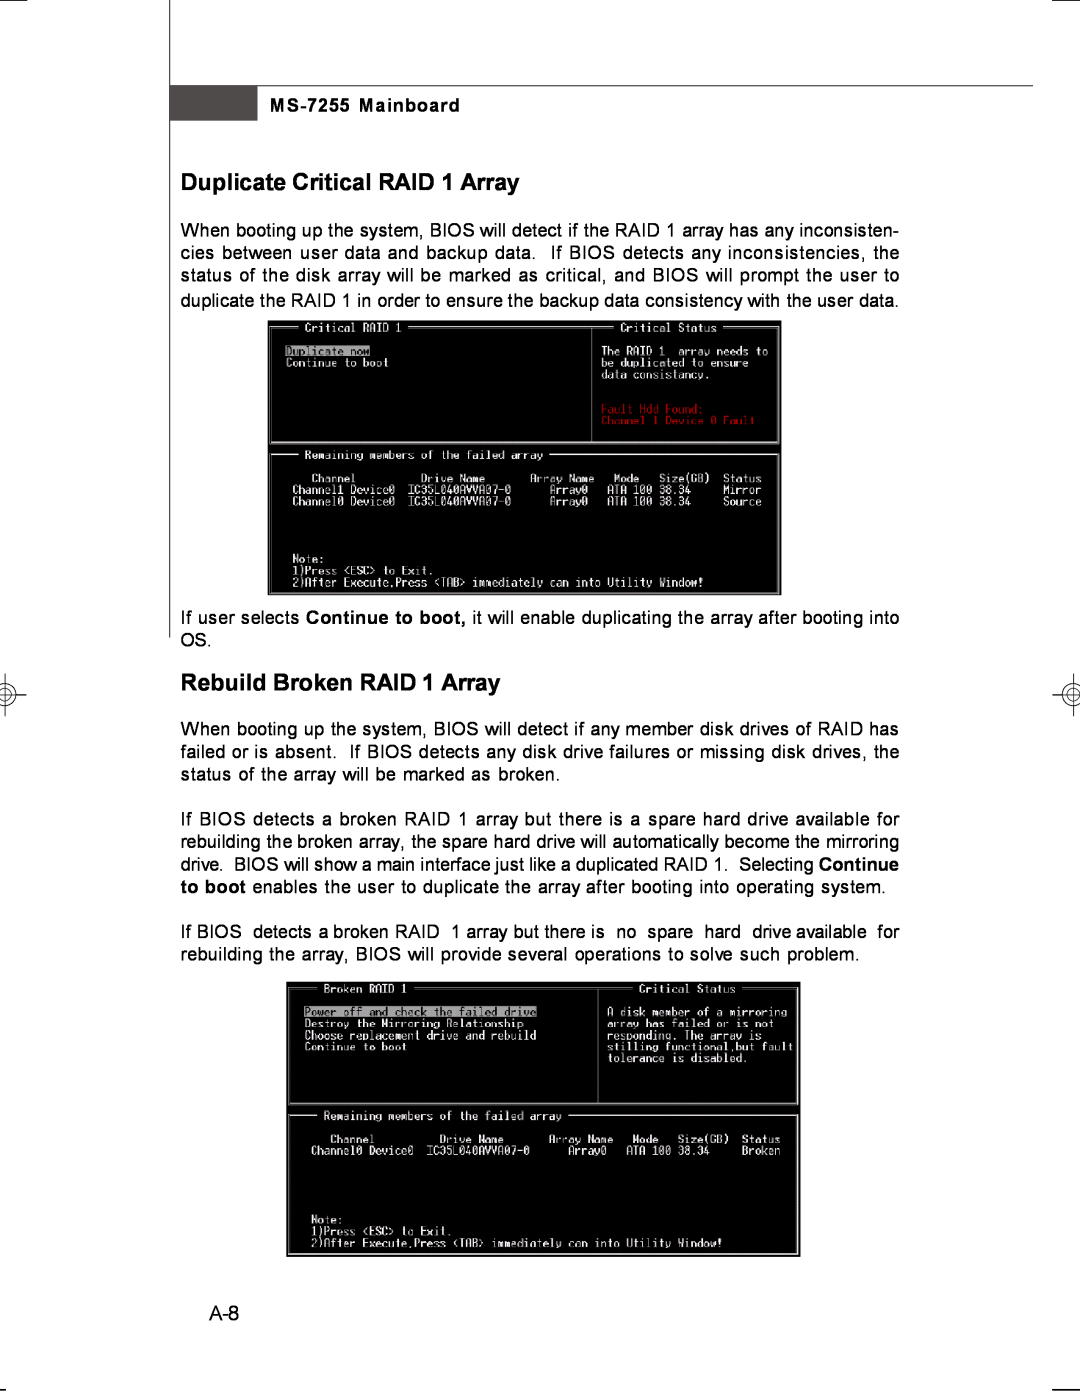 MSI manual Duplicate Critical RAID 1 Array, Rebuild Broken RAID 1 Array, MS-7255 Mainboard 